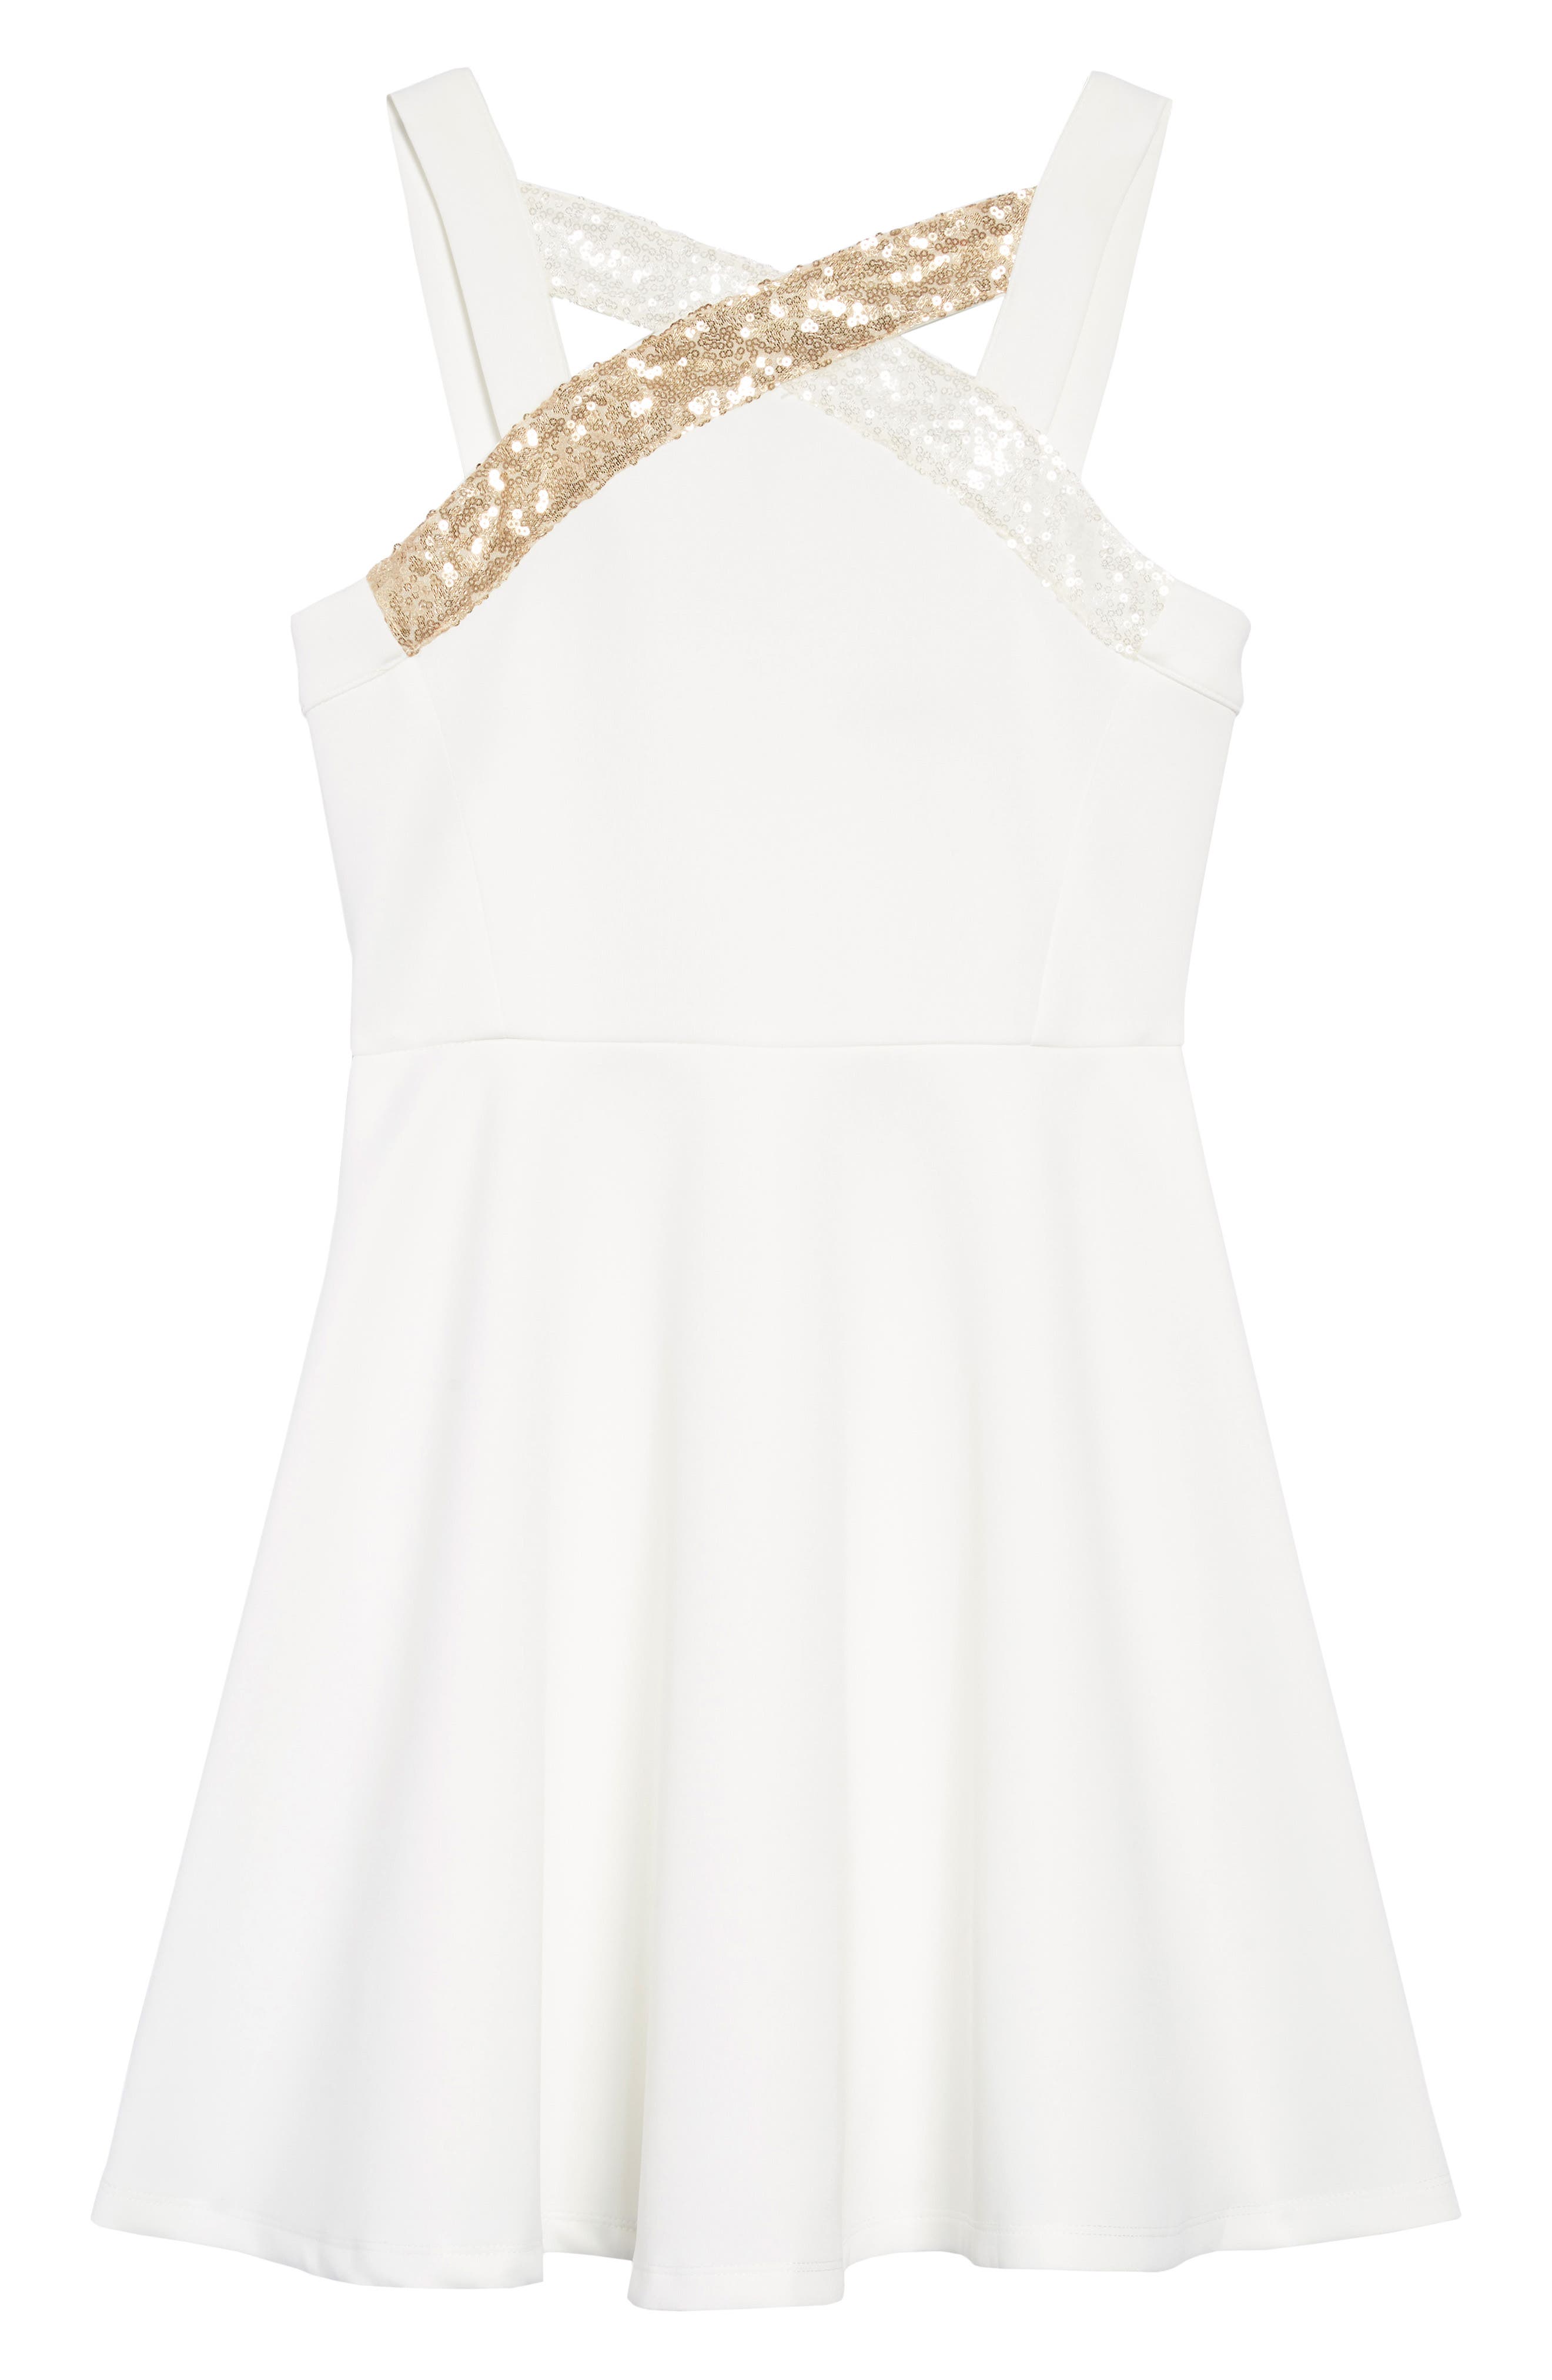 white dresses/rompers